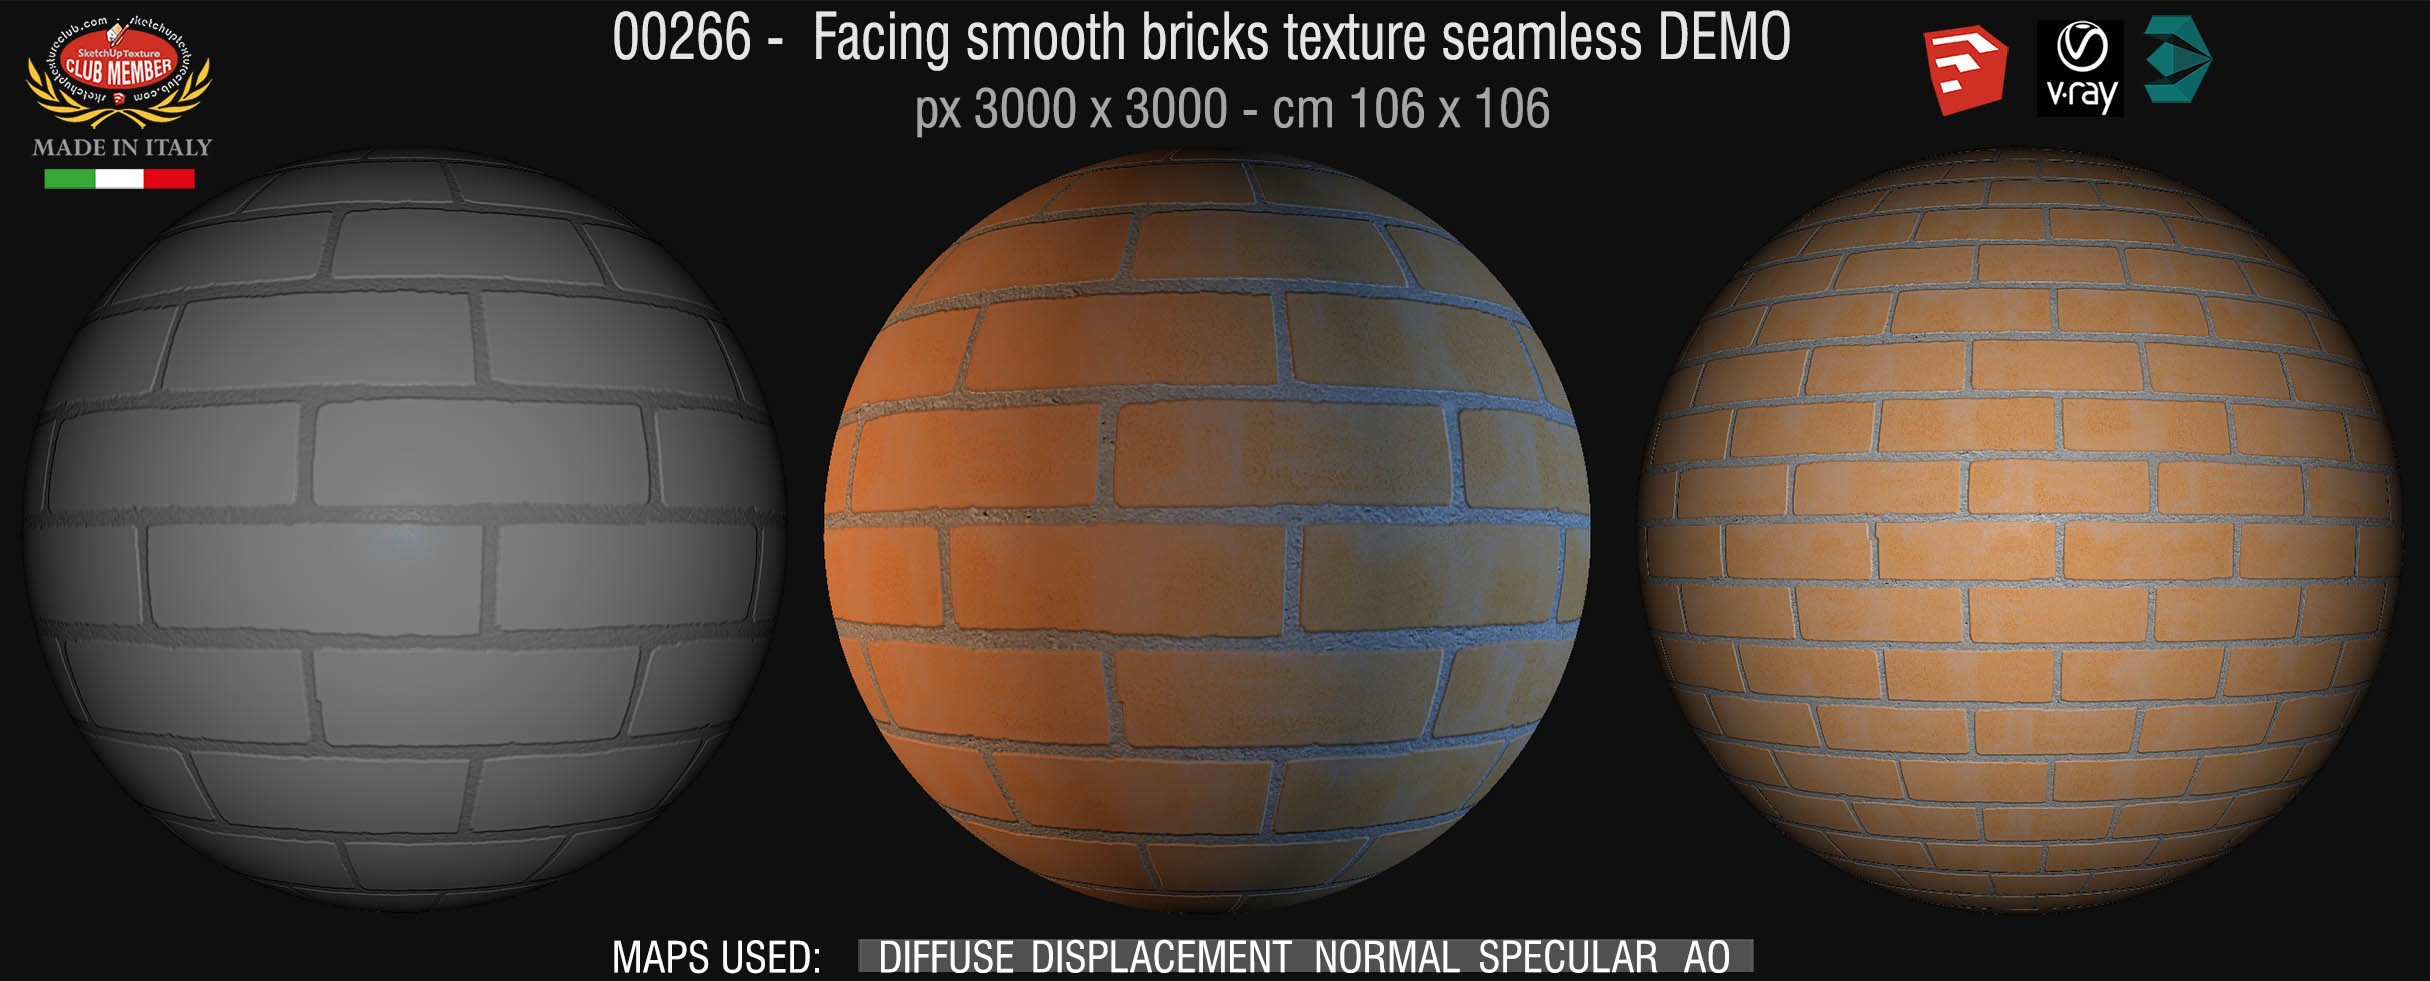 00266 Facing smooth bricks texture seamless + maps DEMO